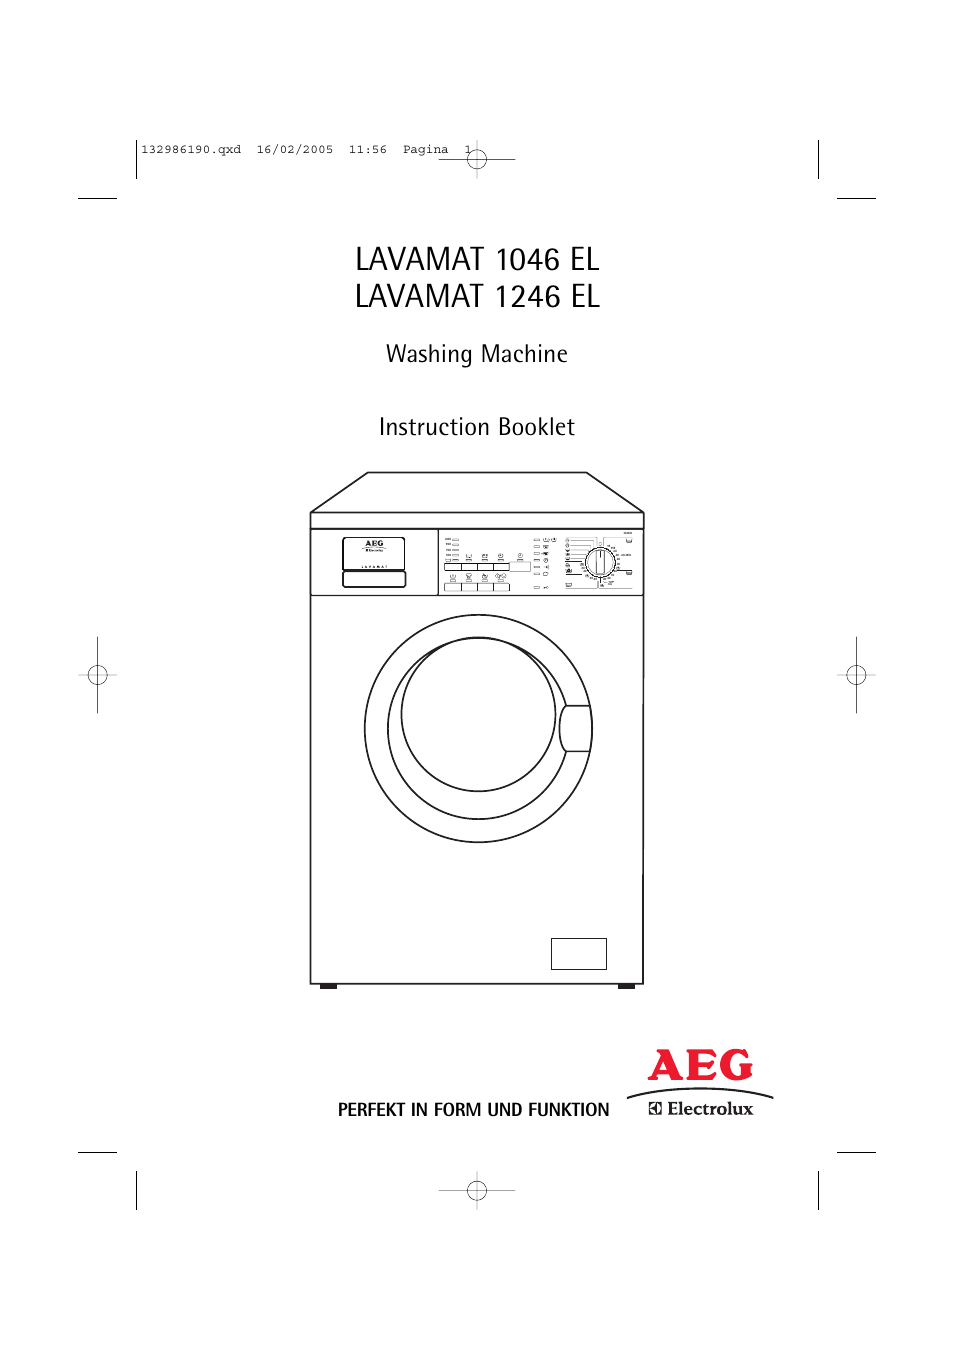 AEG 1246 EL User Manual | 44 pages | Also for: 1046 EL